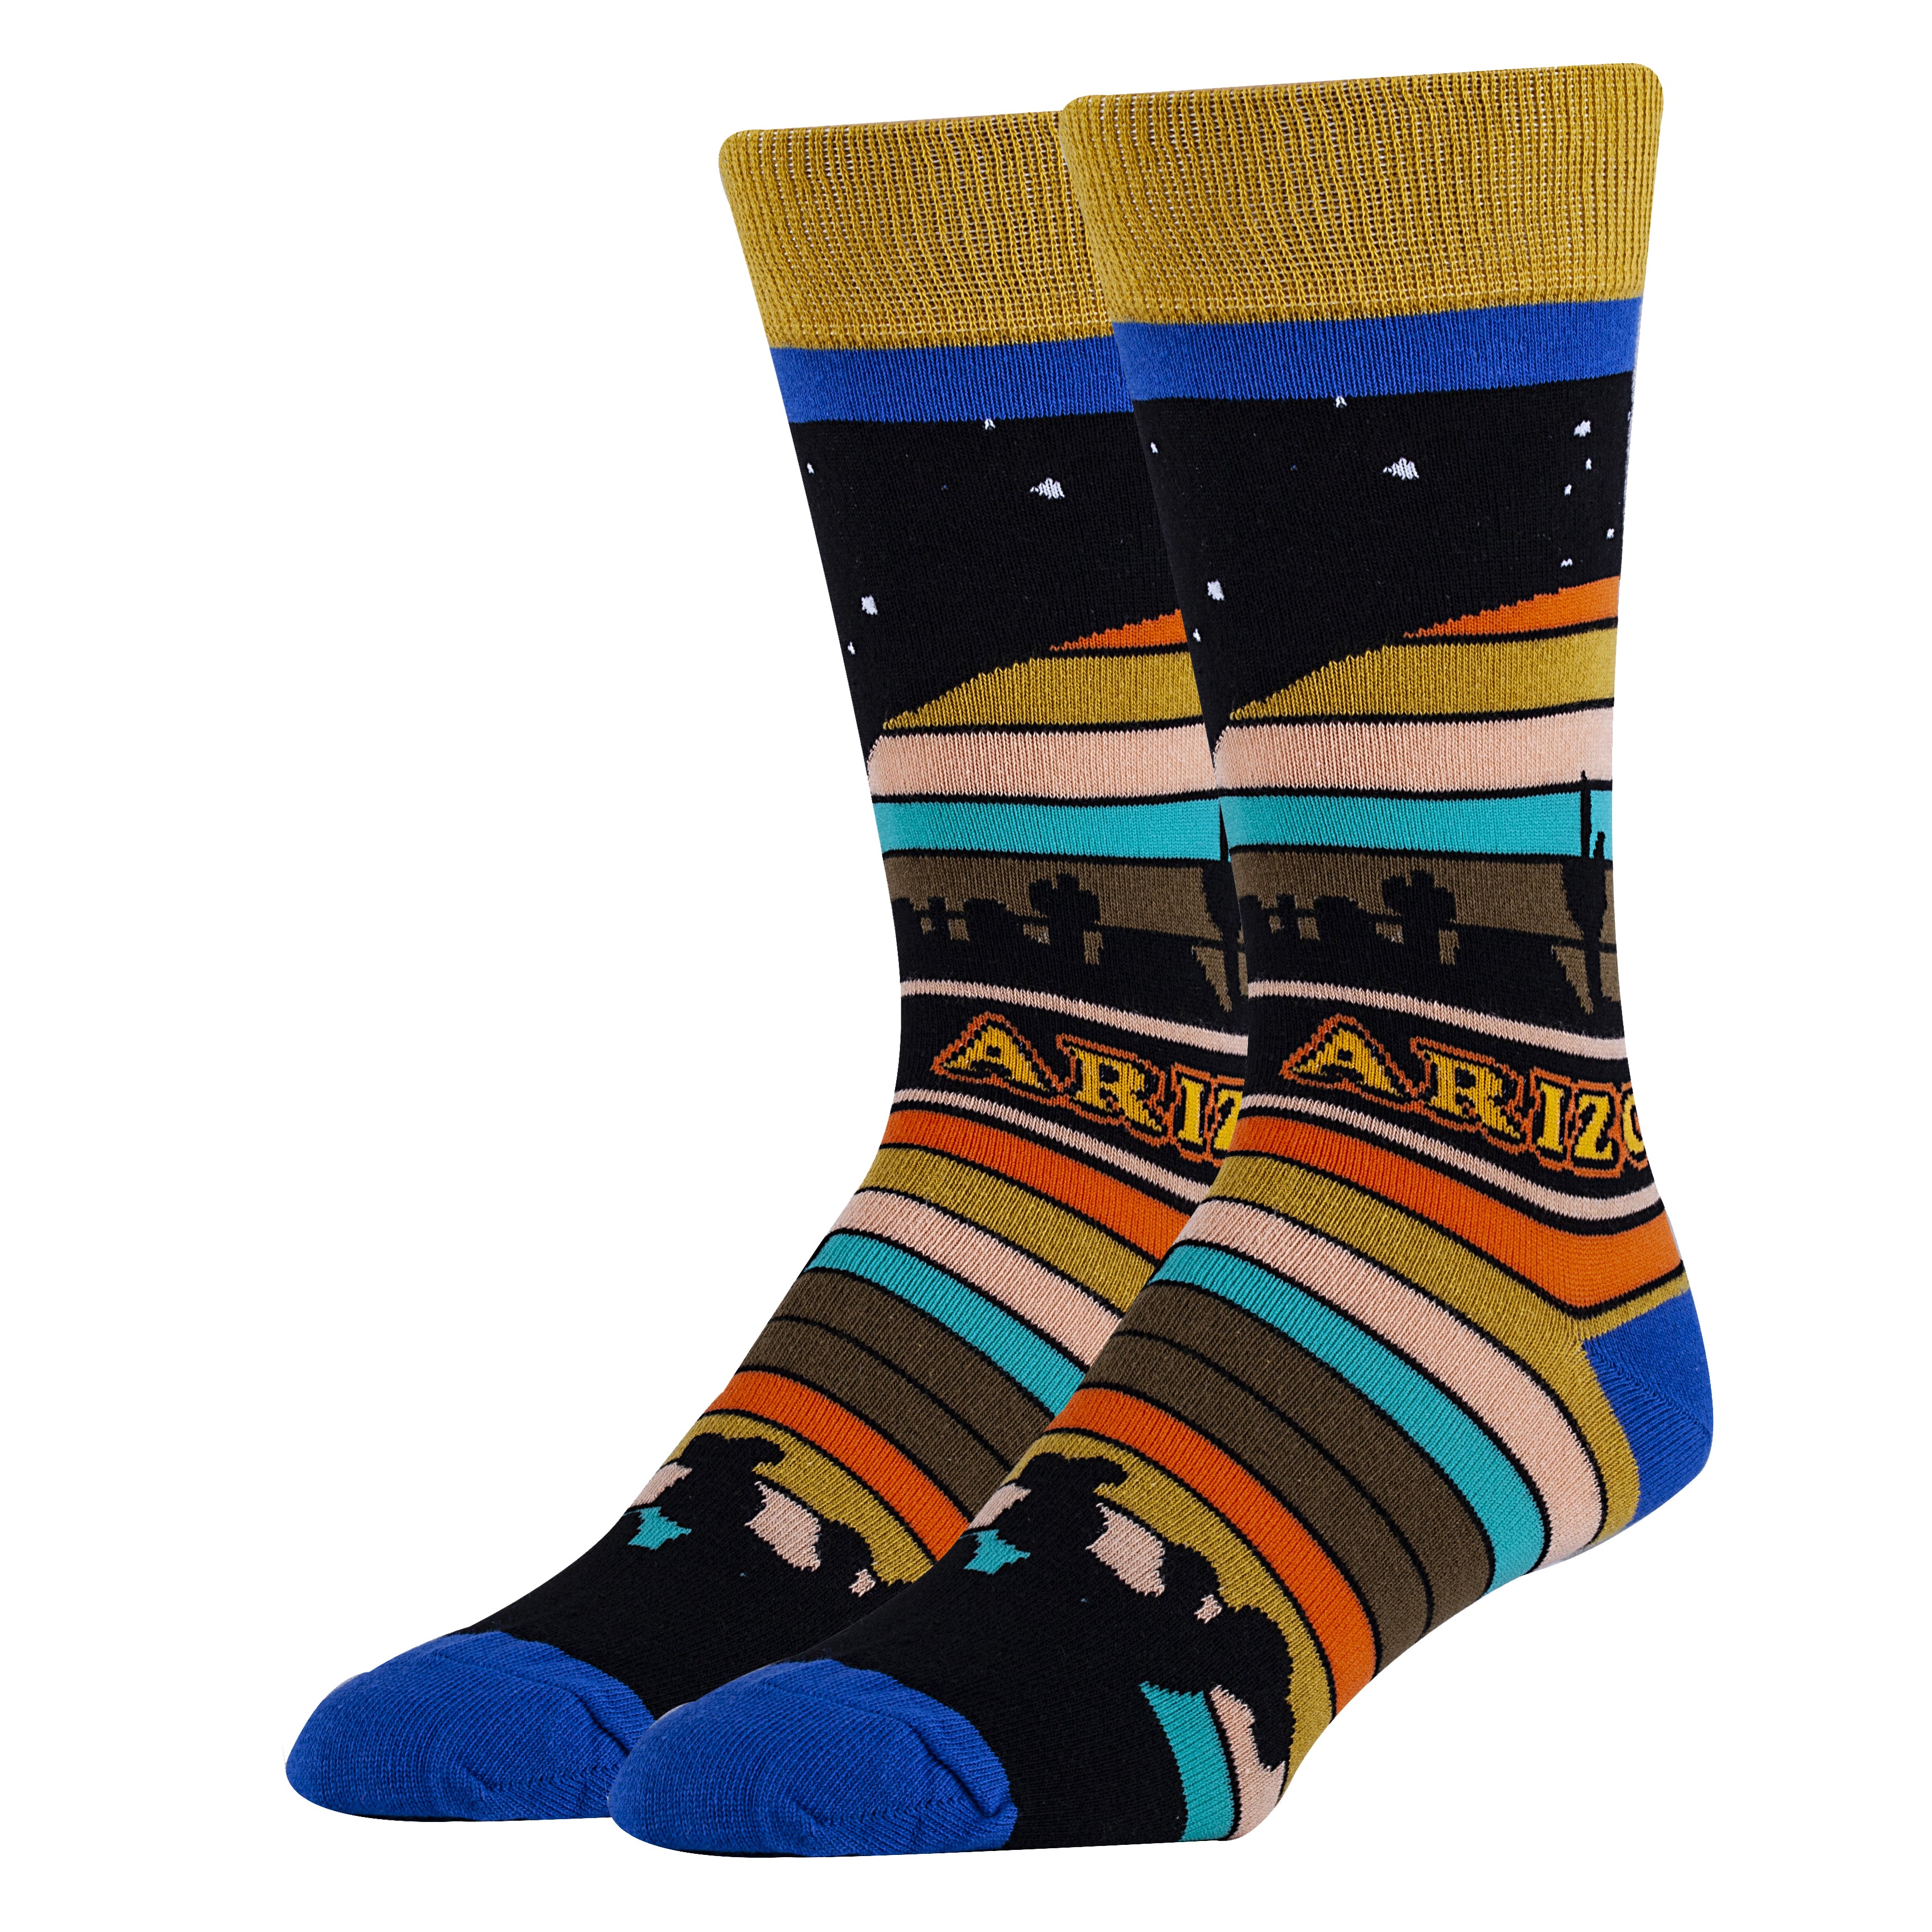 Arizona Socks | Men Crew Novelty Oooh Yeah! Socks For Socks 